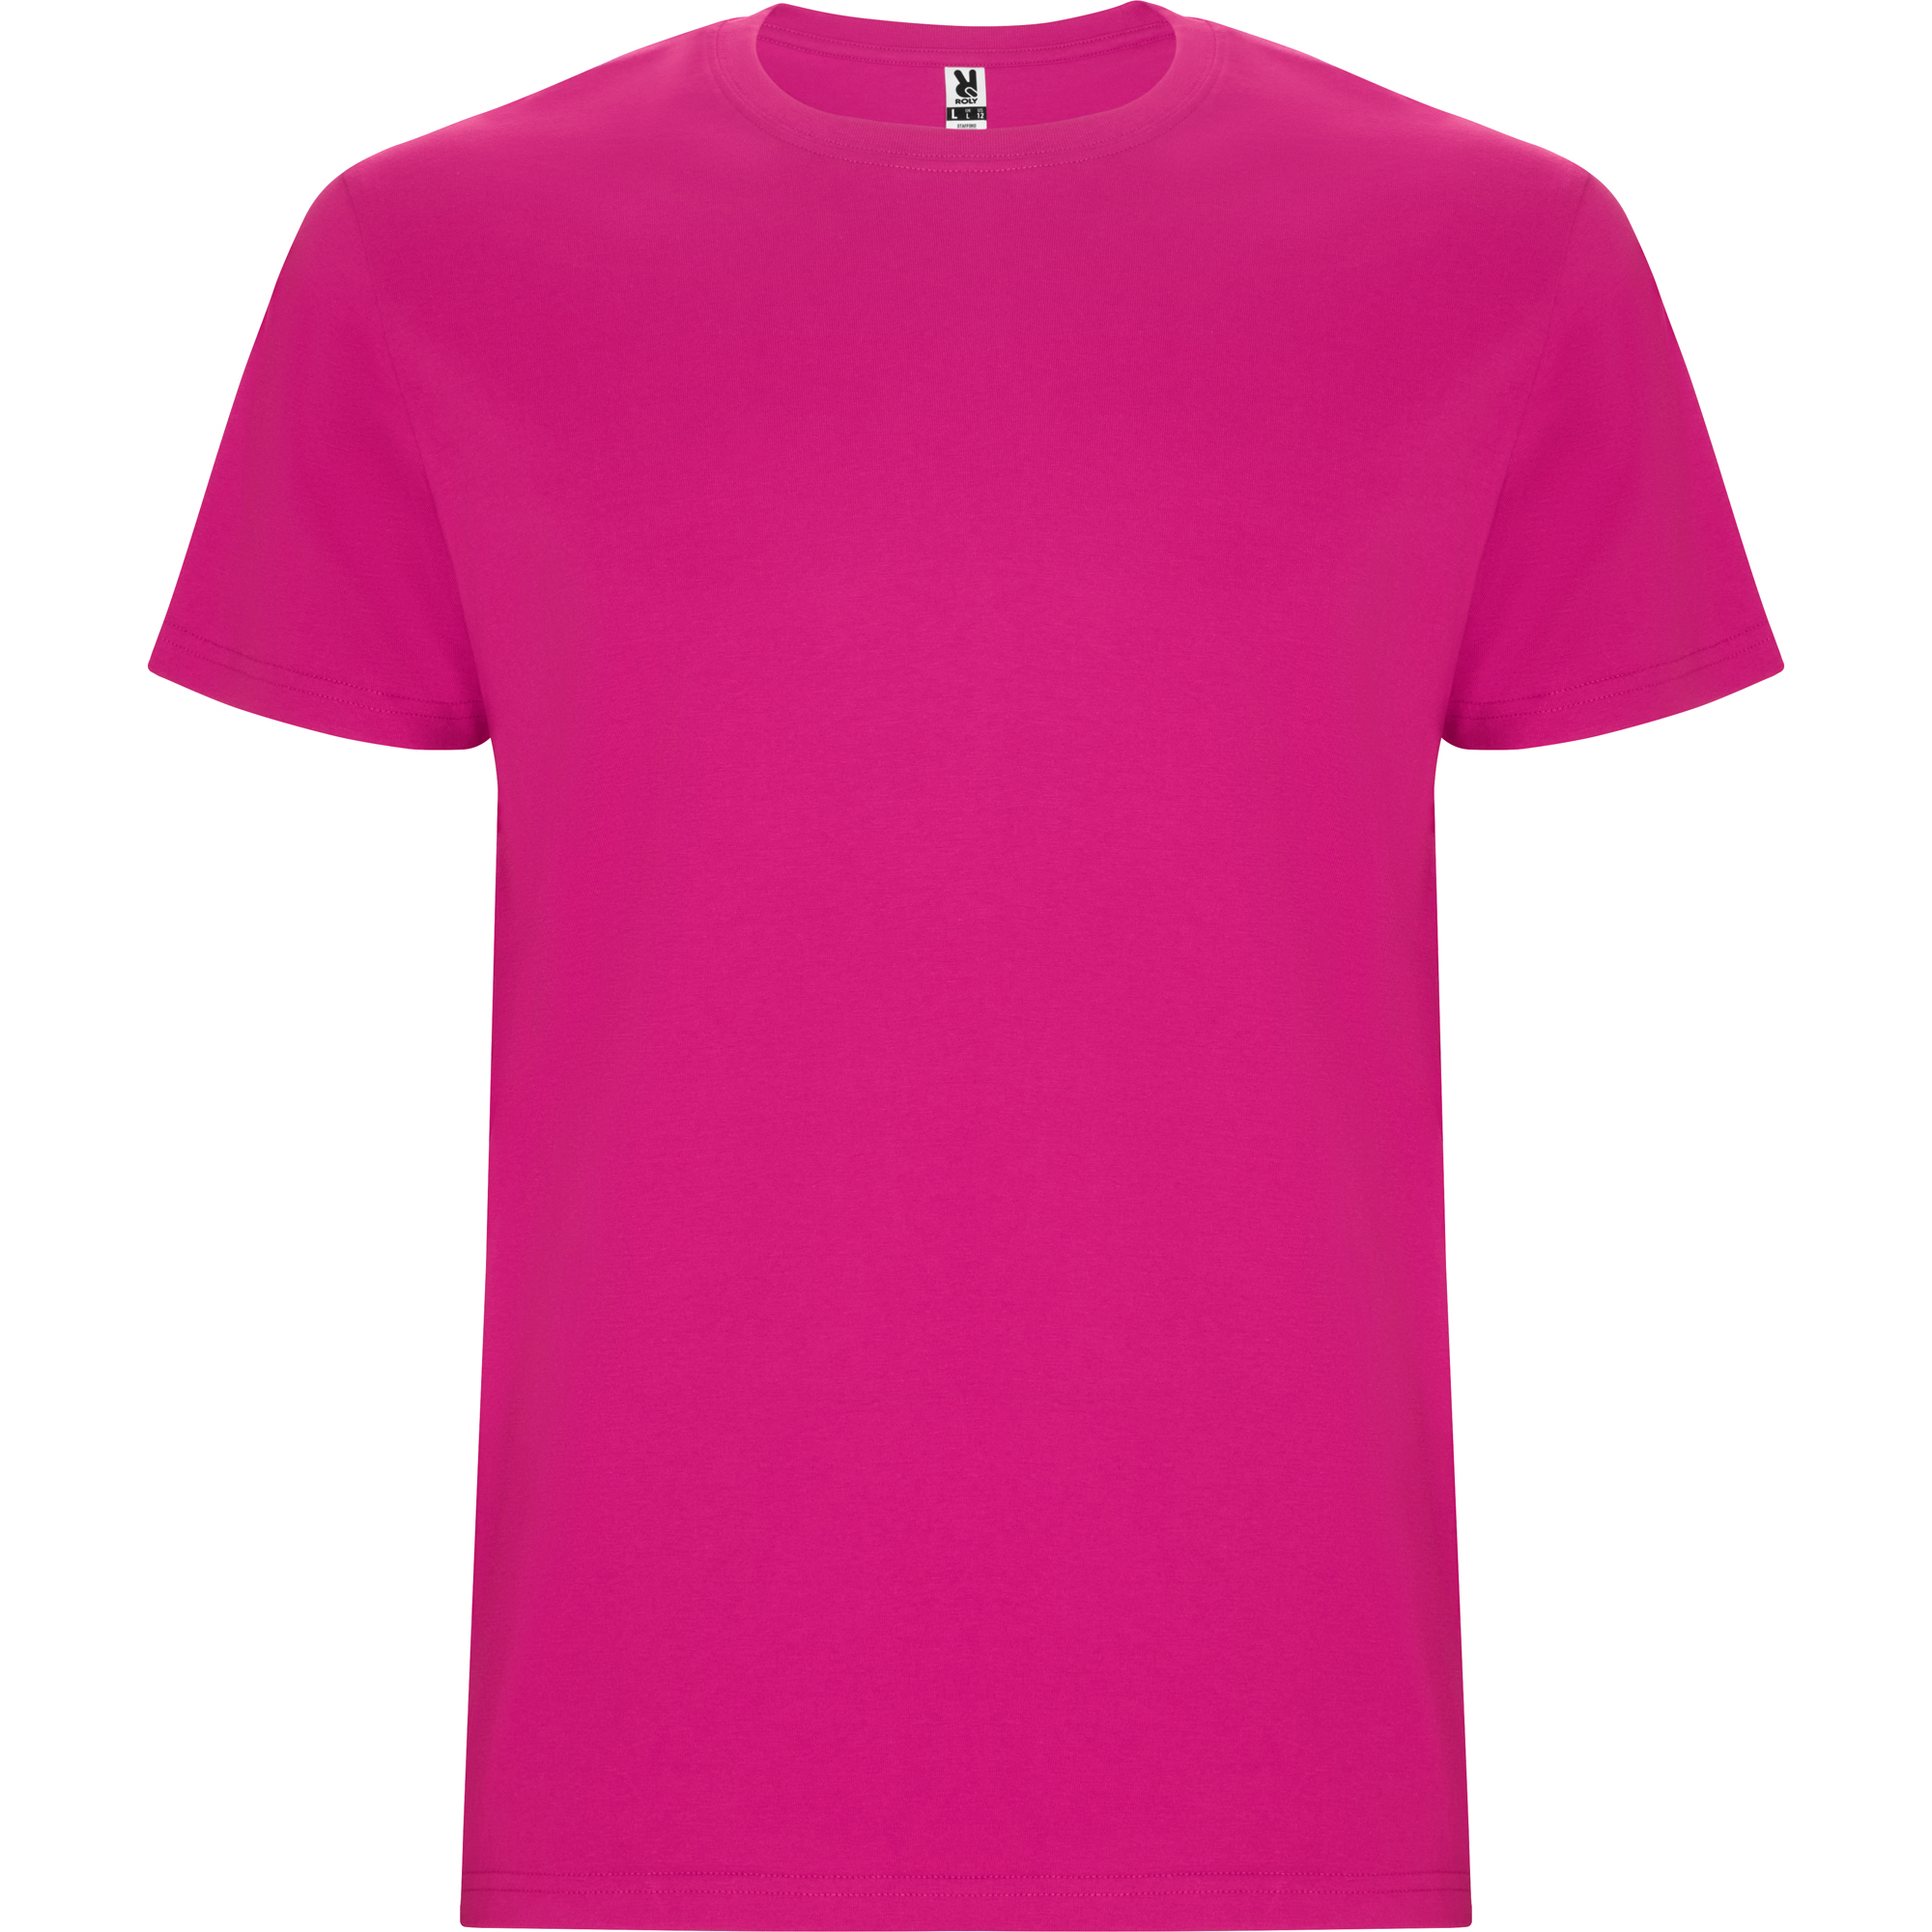 r6681-roly-stafford-t-shirt-tubolare-rosa-orchidea.jpg